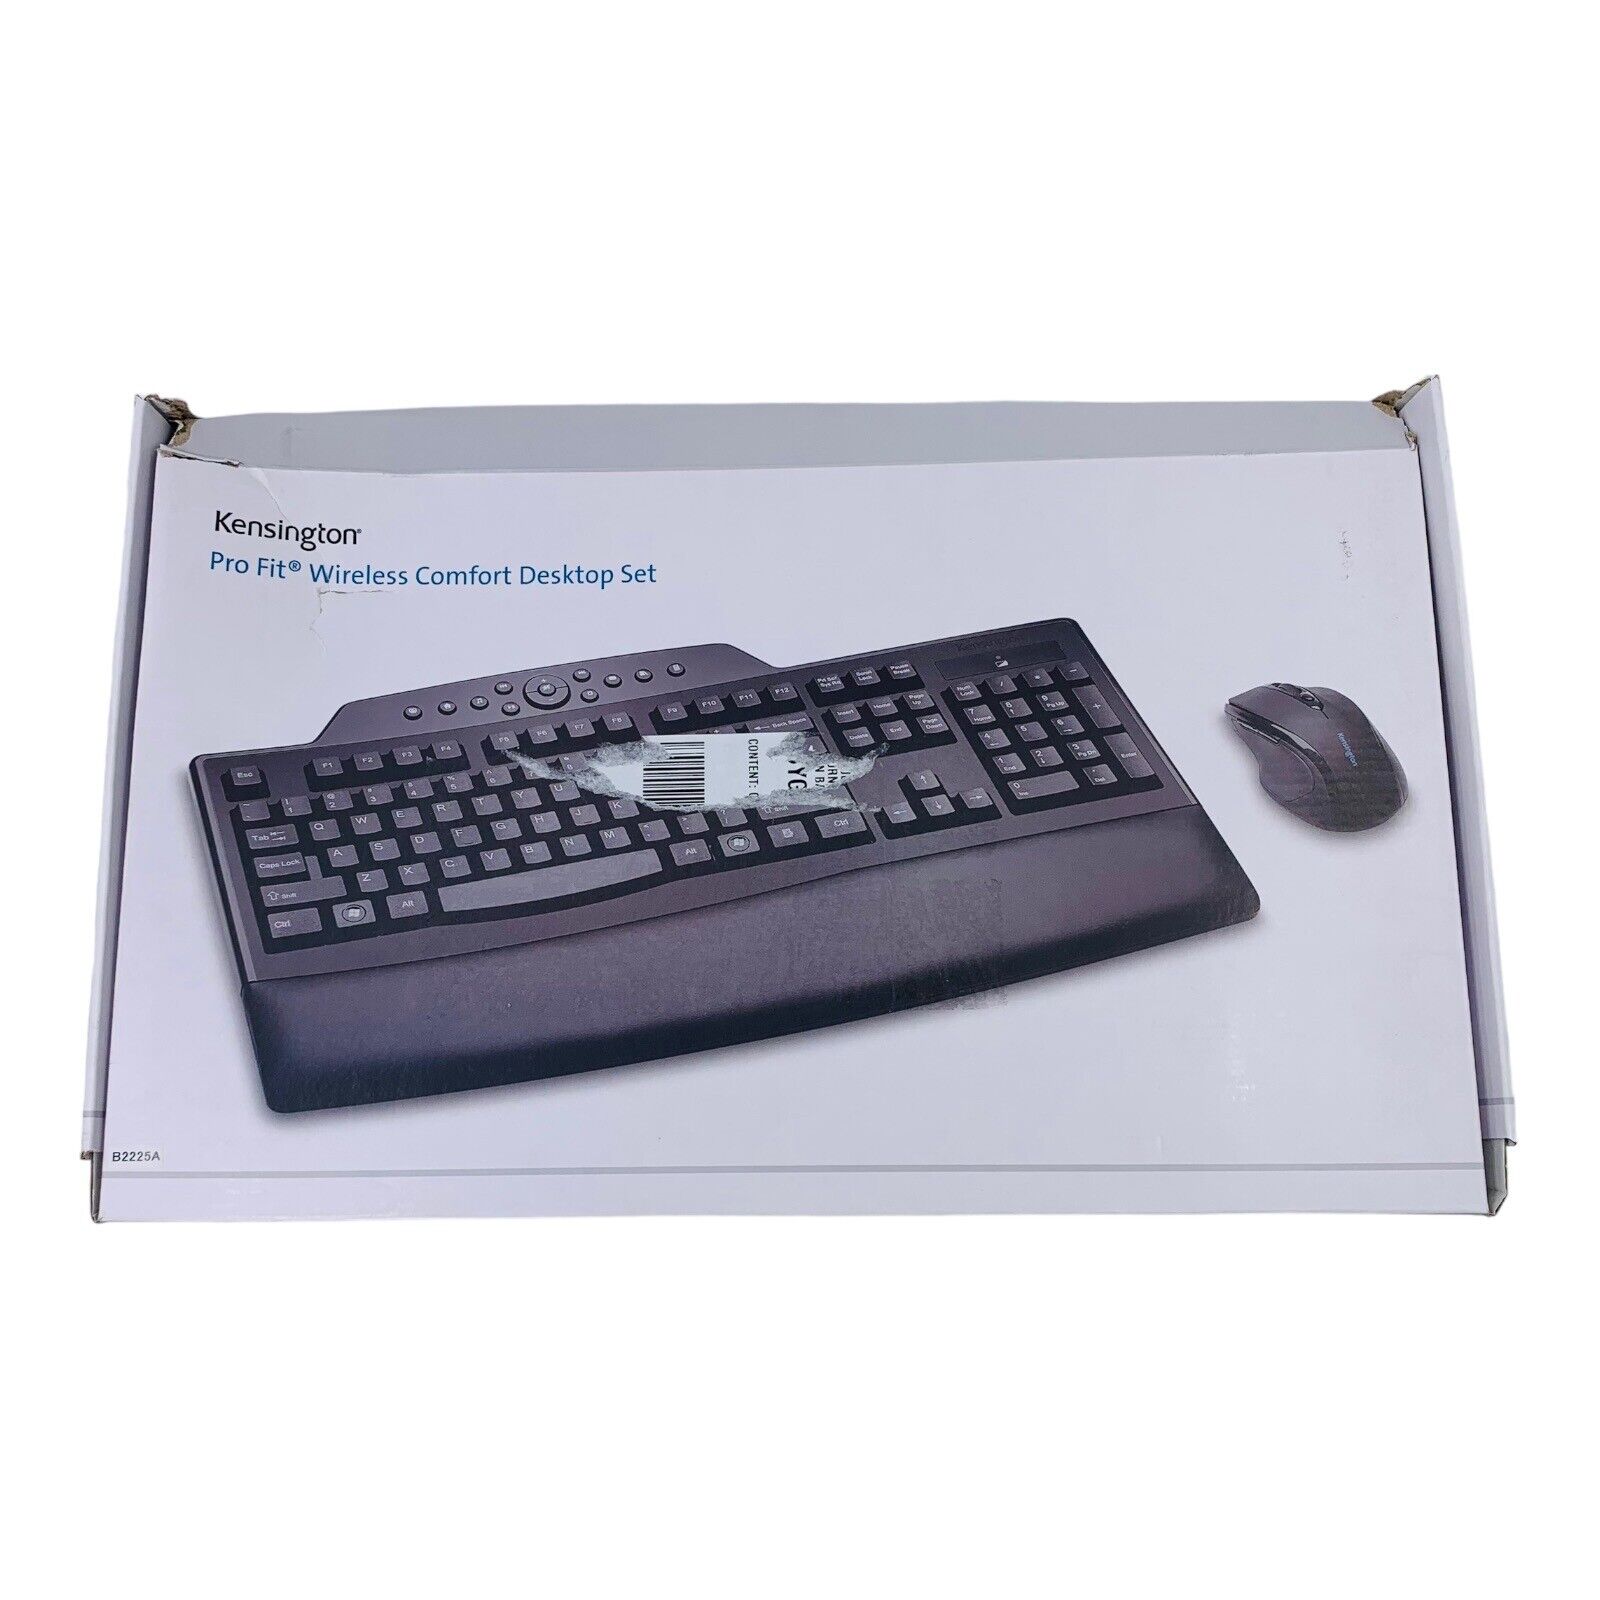 Kensington Pro Fit Wireless Comfort Desktop Set Black Keyboard & Mouse Combo